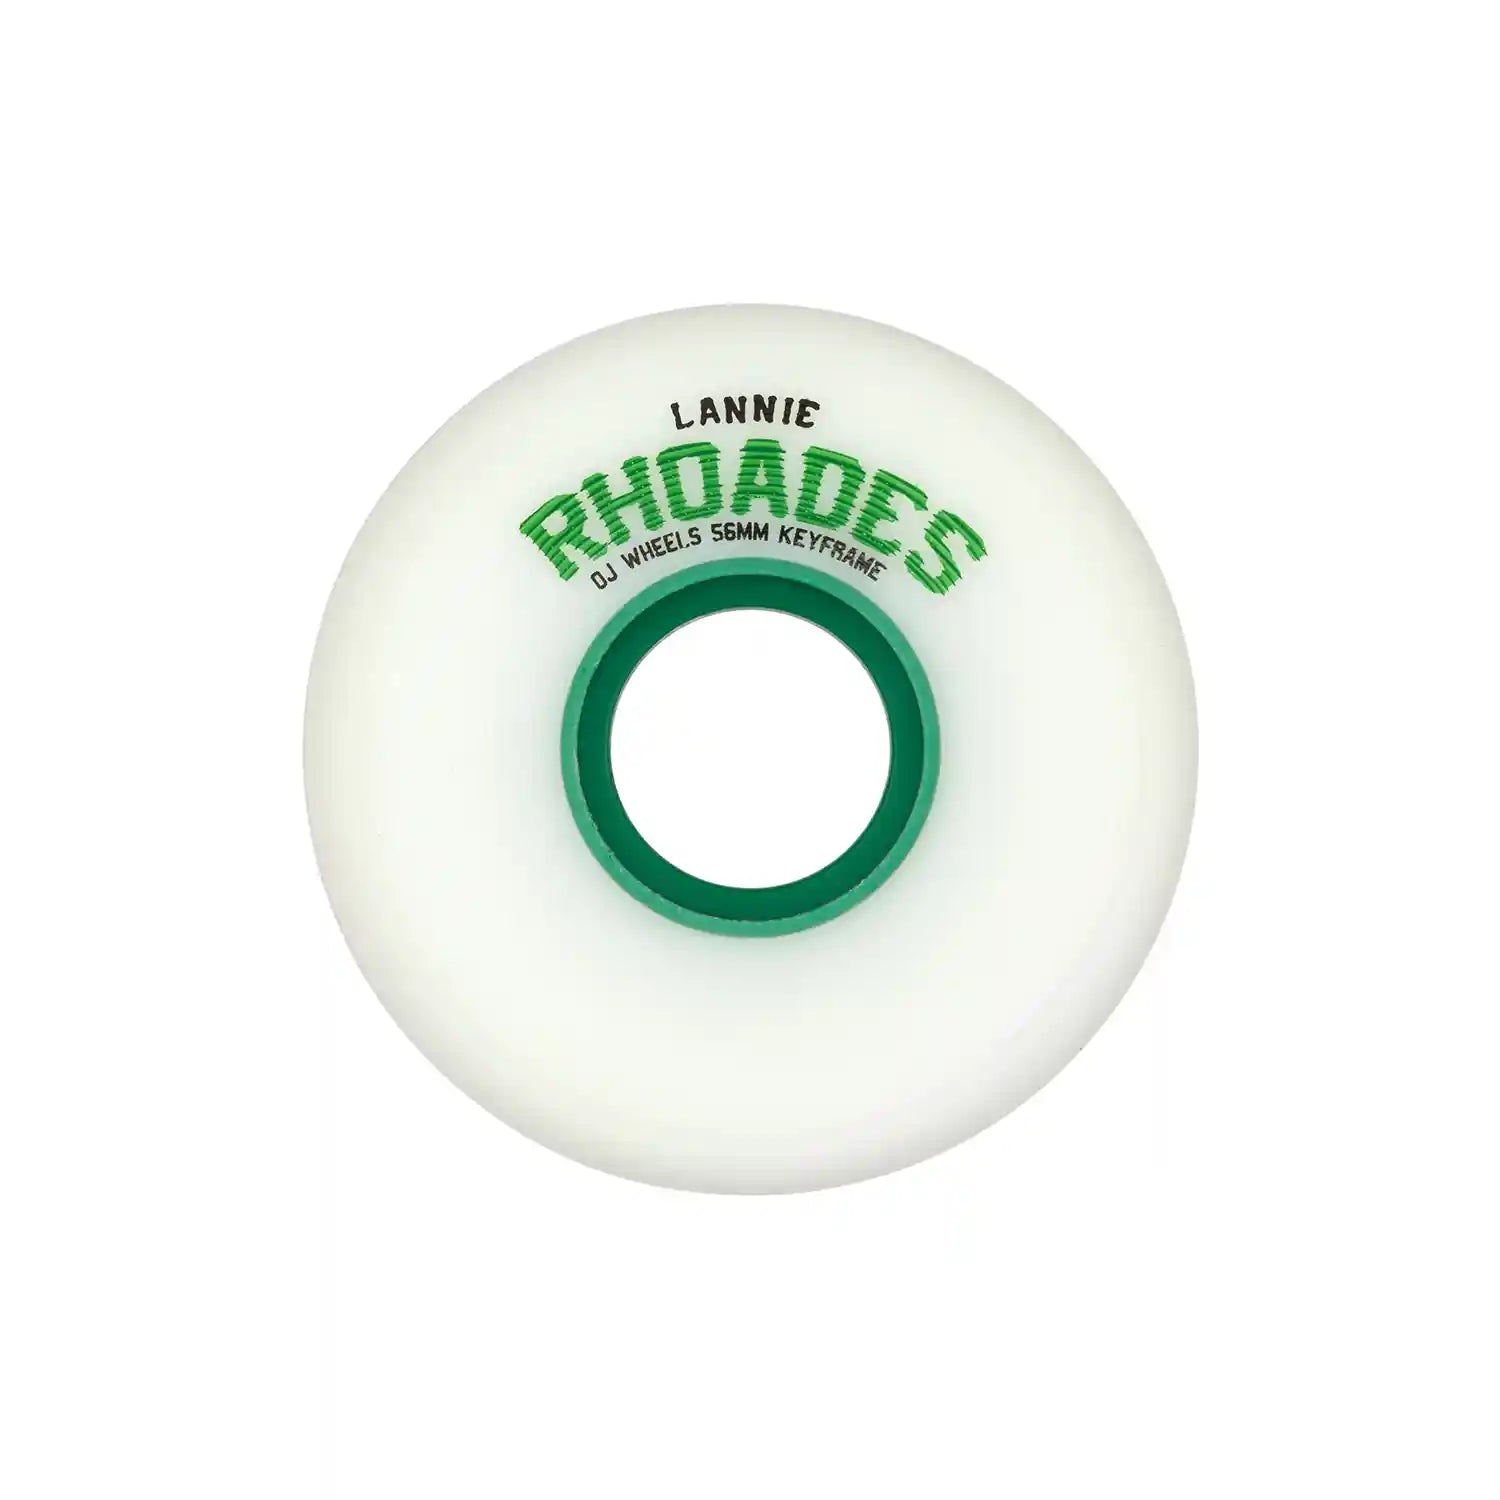 OJ's Lannie Rhoades Oside Pirate 2 Keyframe Wheels White 87A (56mm) - Tiki Room Skateboards - 2